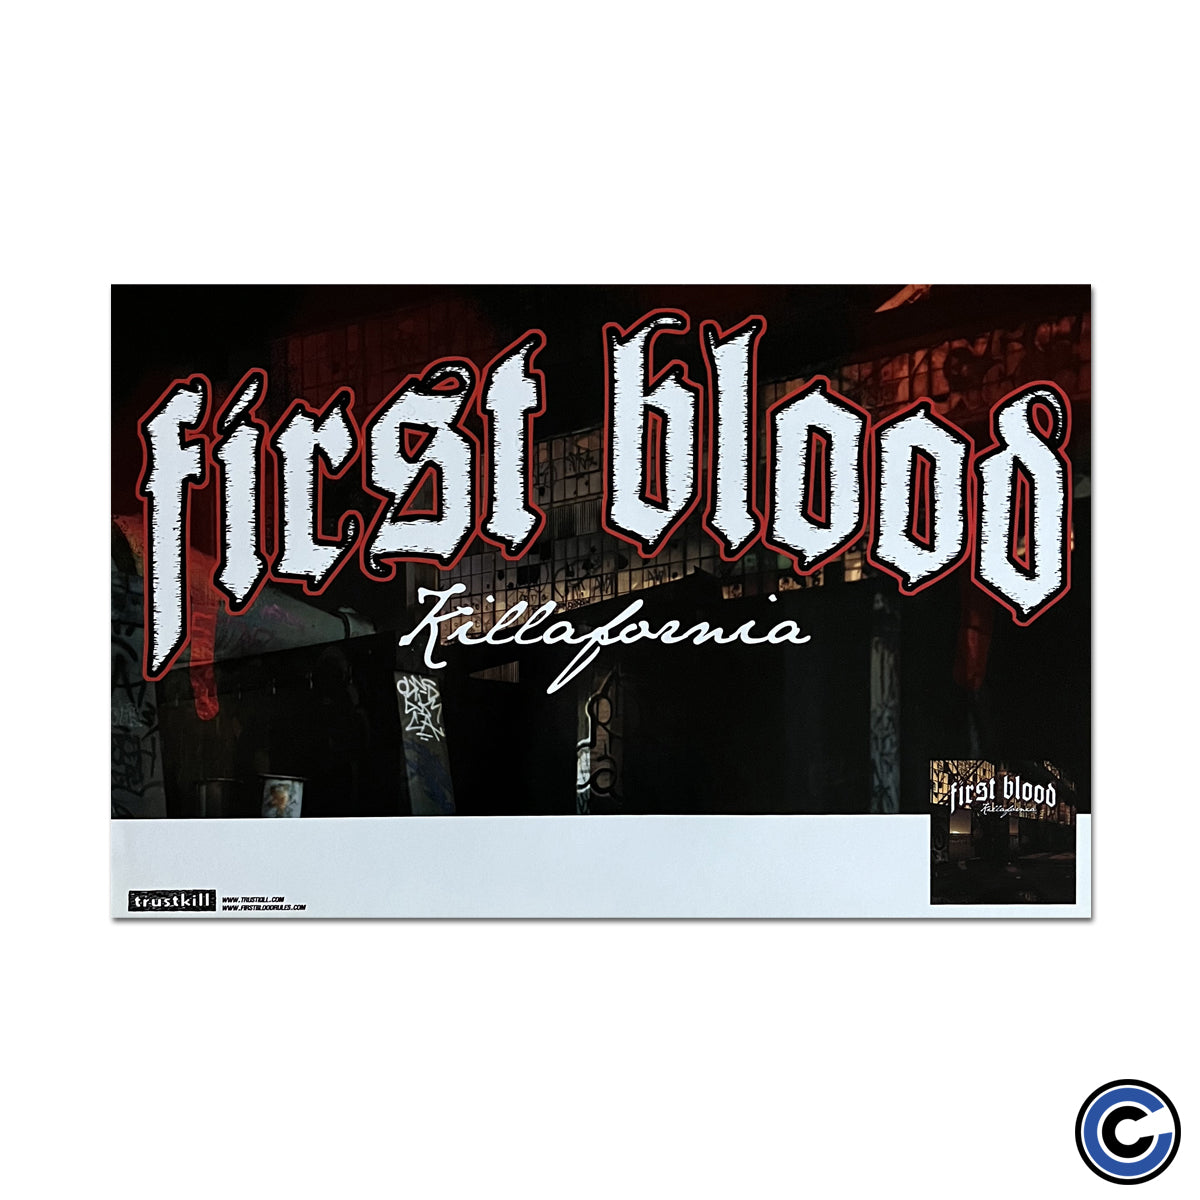 First Blood "Killafornia" Poster